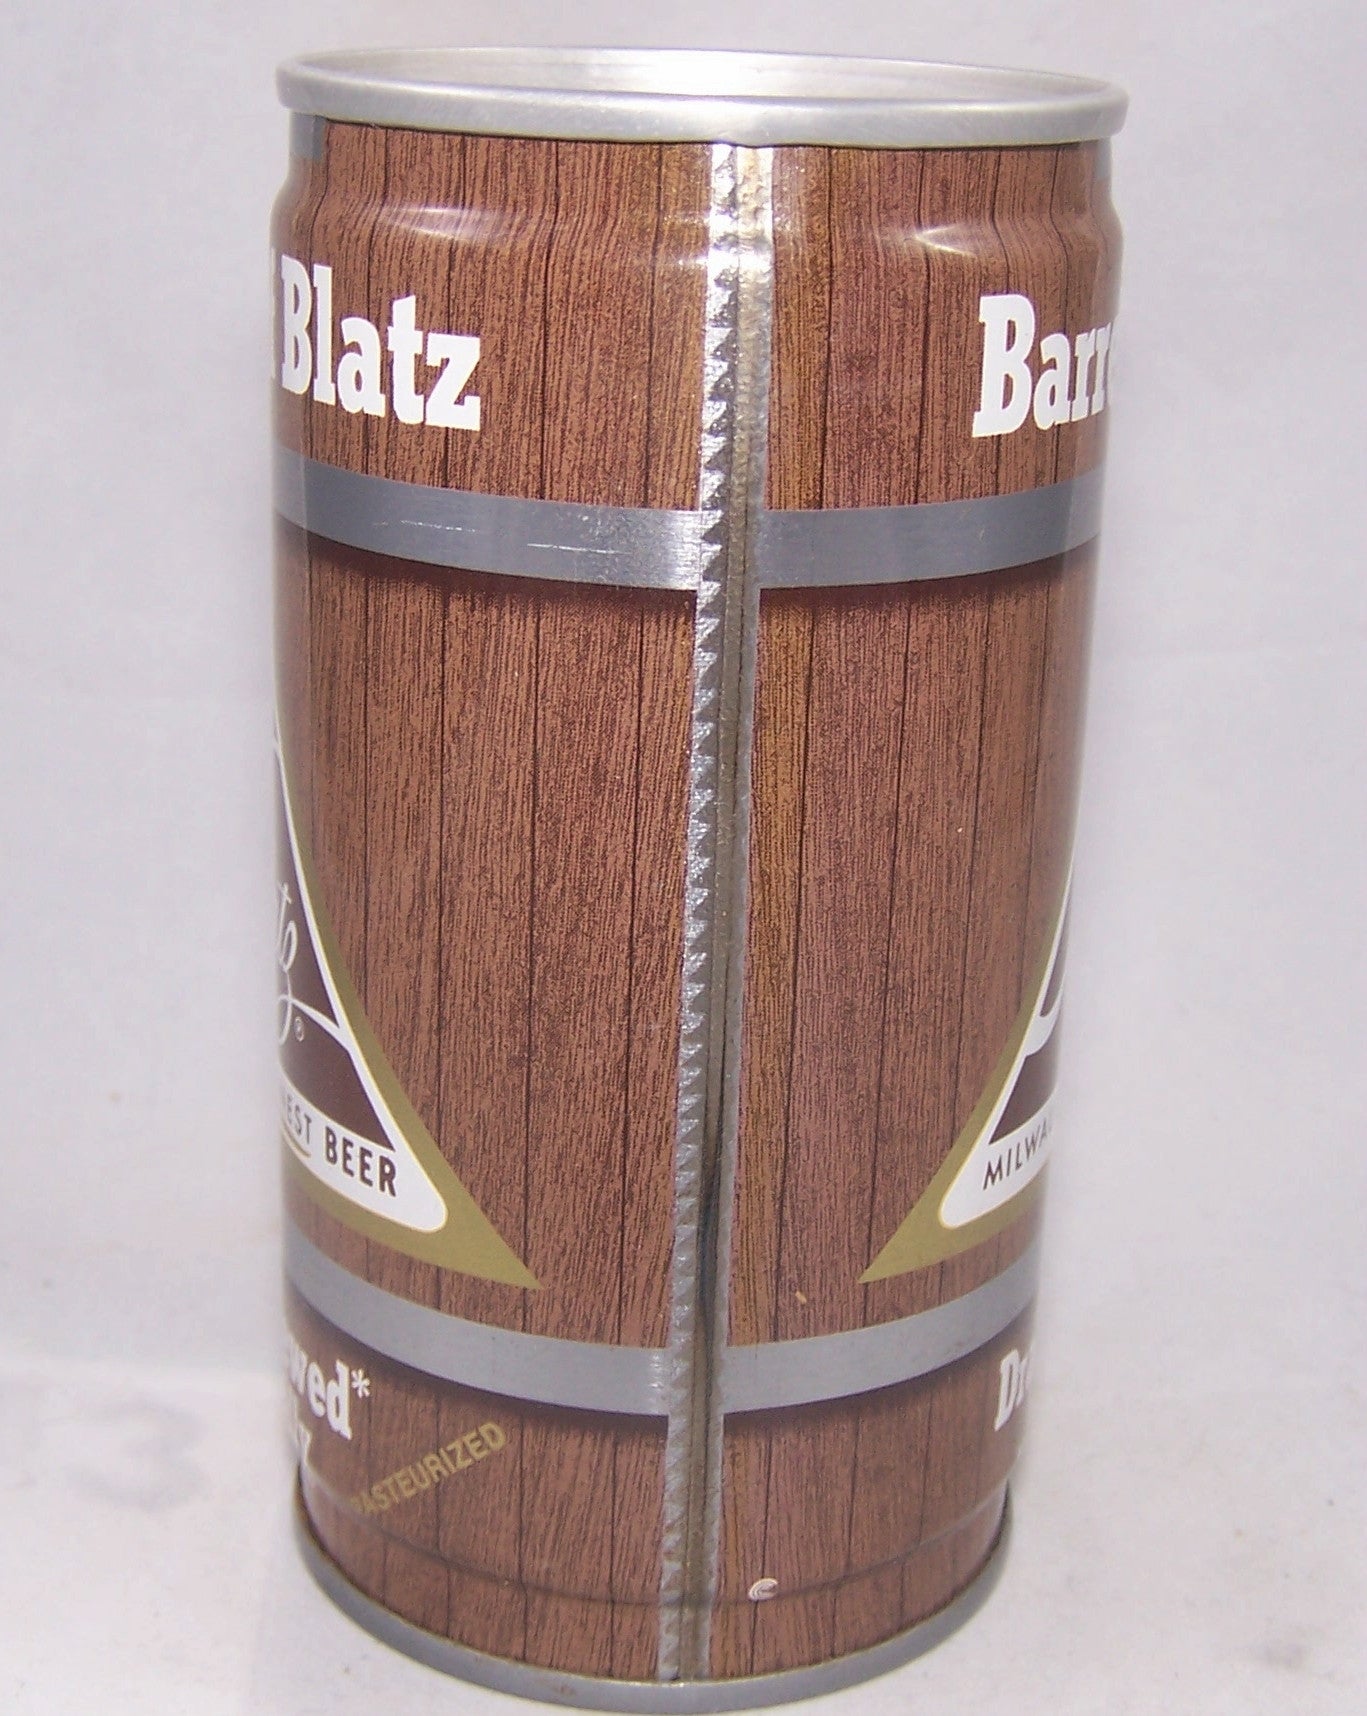 Blatz " Barrel of Blatz" test can, USBC II 226-33, Grade 1/1+  Sold on 07/22/18